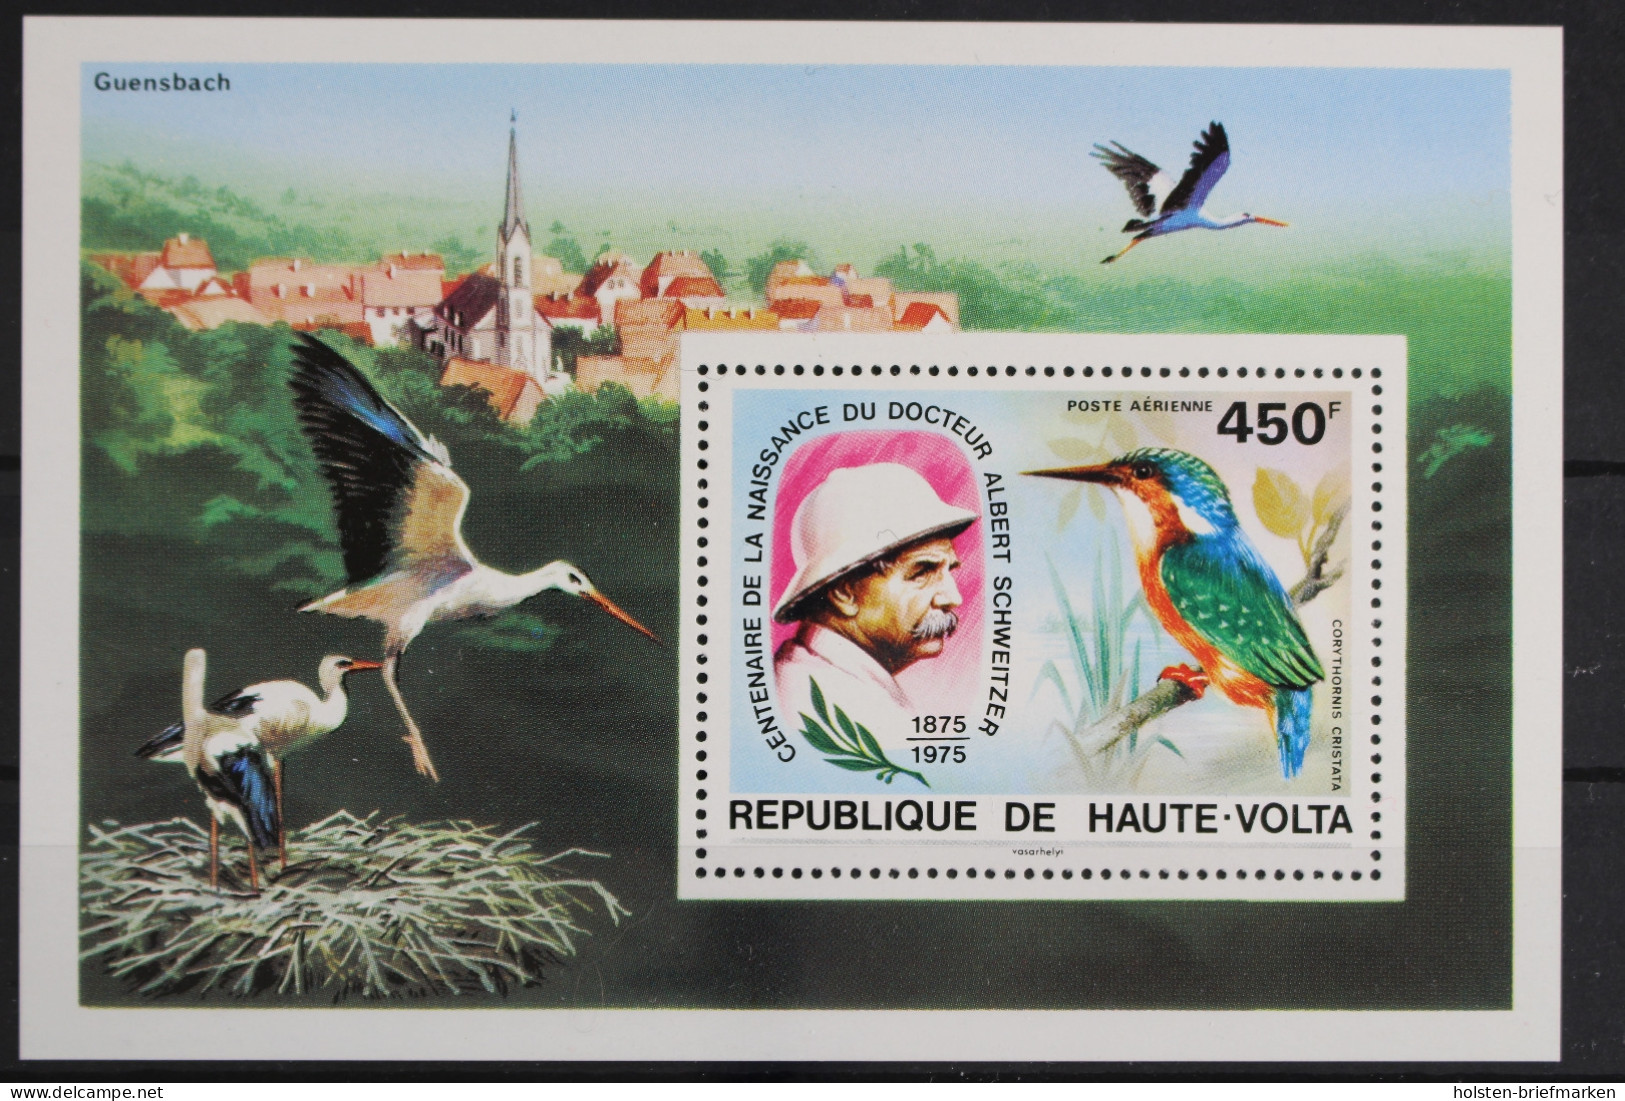 Obervolta, Vögel, MiNr. Block 35, Postfrisch - Burkina Faso (1984-...)